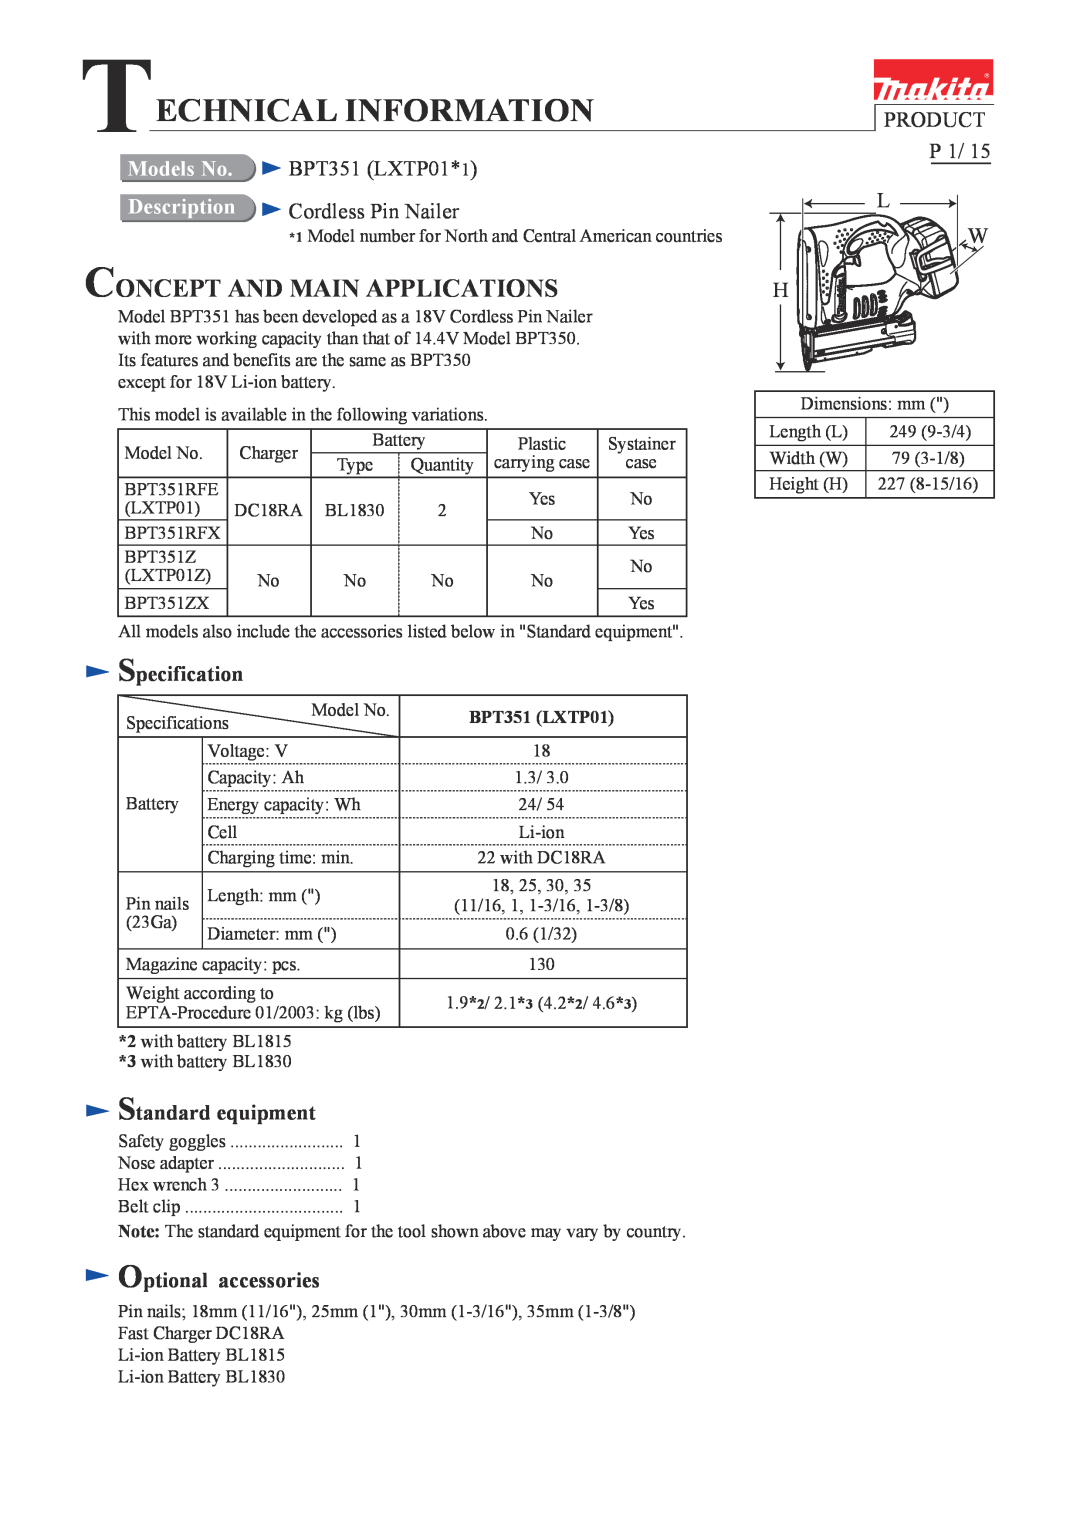 Makita specifications Models No. BPT351 LXTP01*1, PRODUCT P 1, L W H, Specification, Standard equipment, Description 